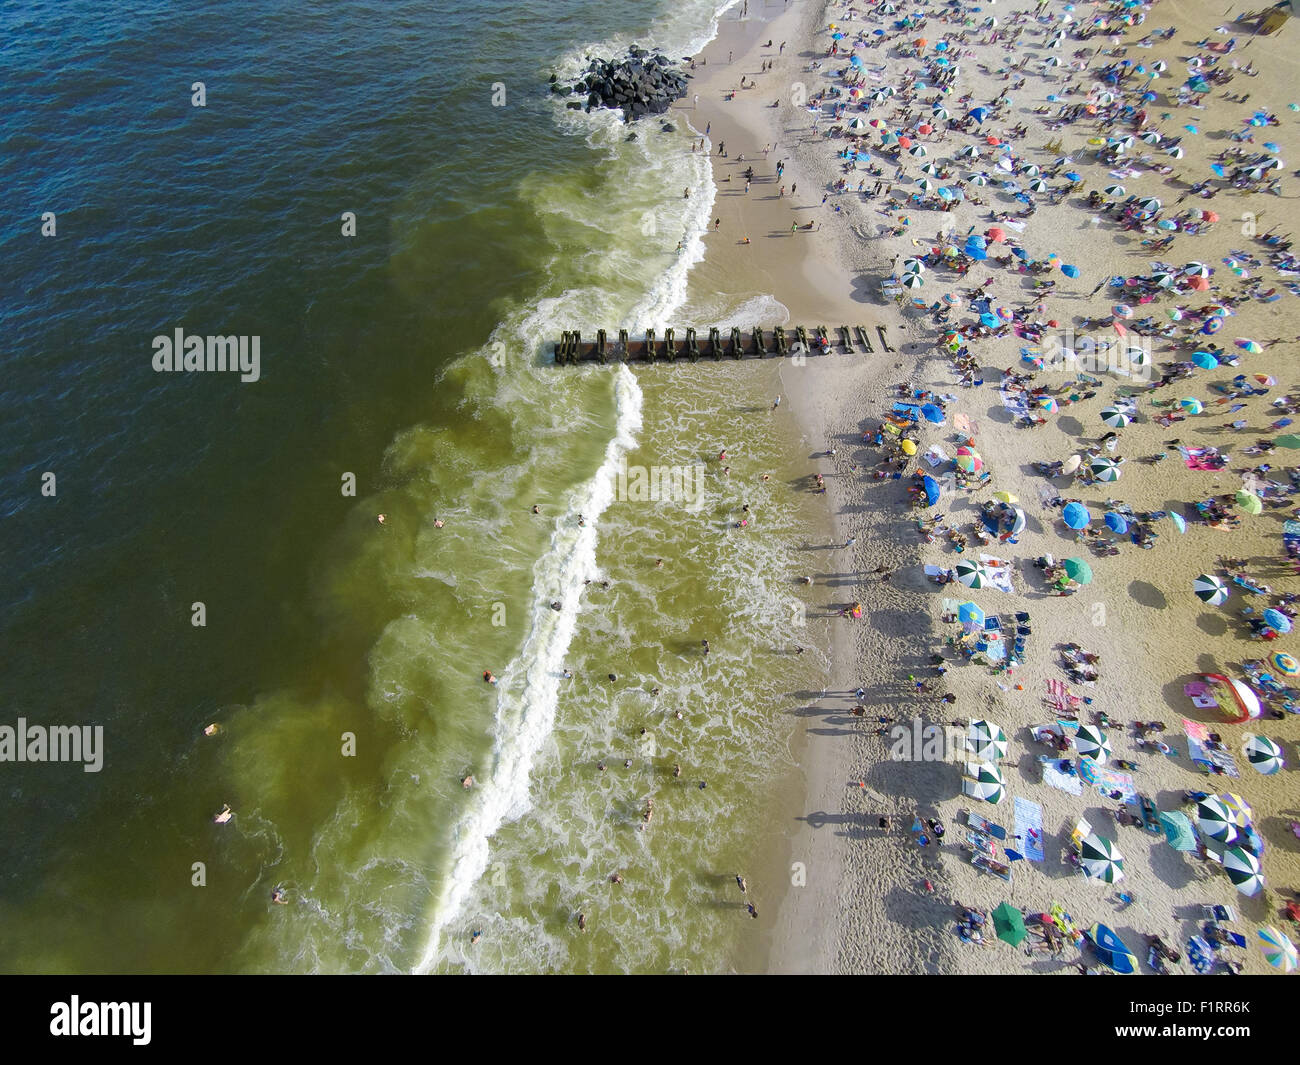 https://c8.alamy.com/comp/F1RR6K/long-branch-nj-usa-6th-september-2015-us-weather-crowds-of-beach-goers-F1RR6K.jpg